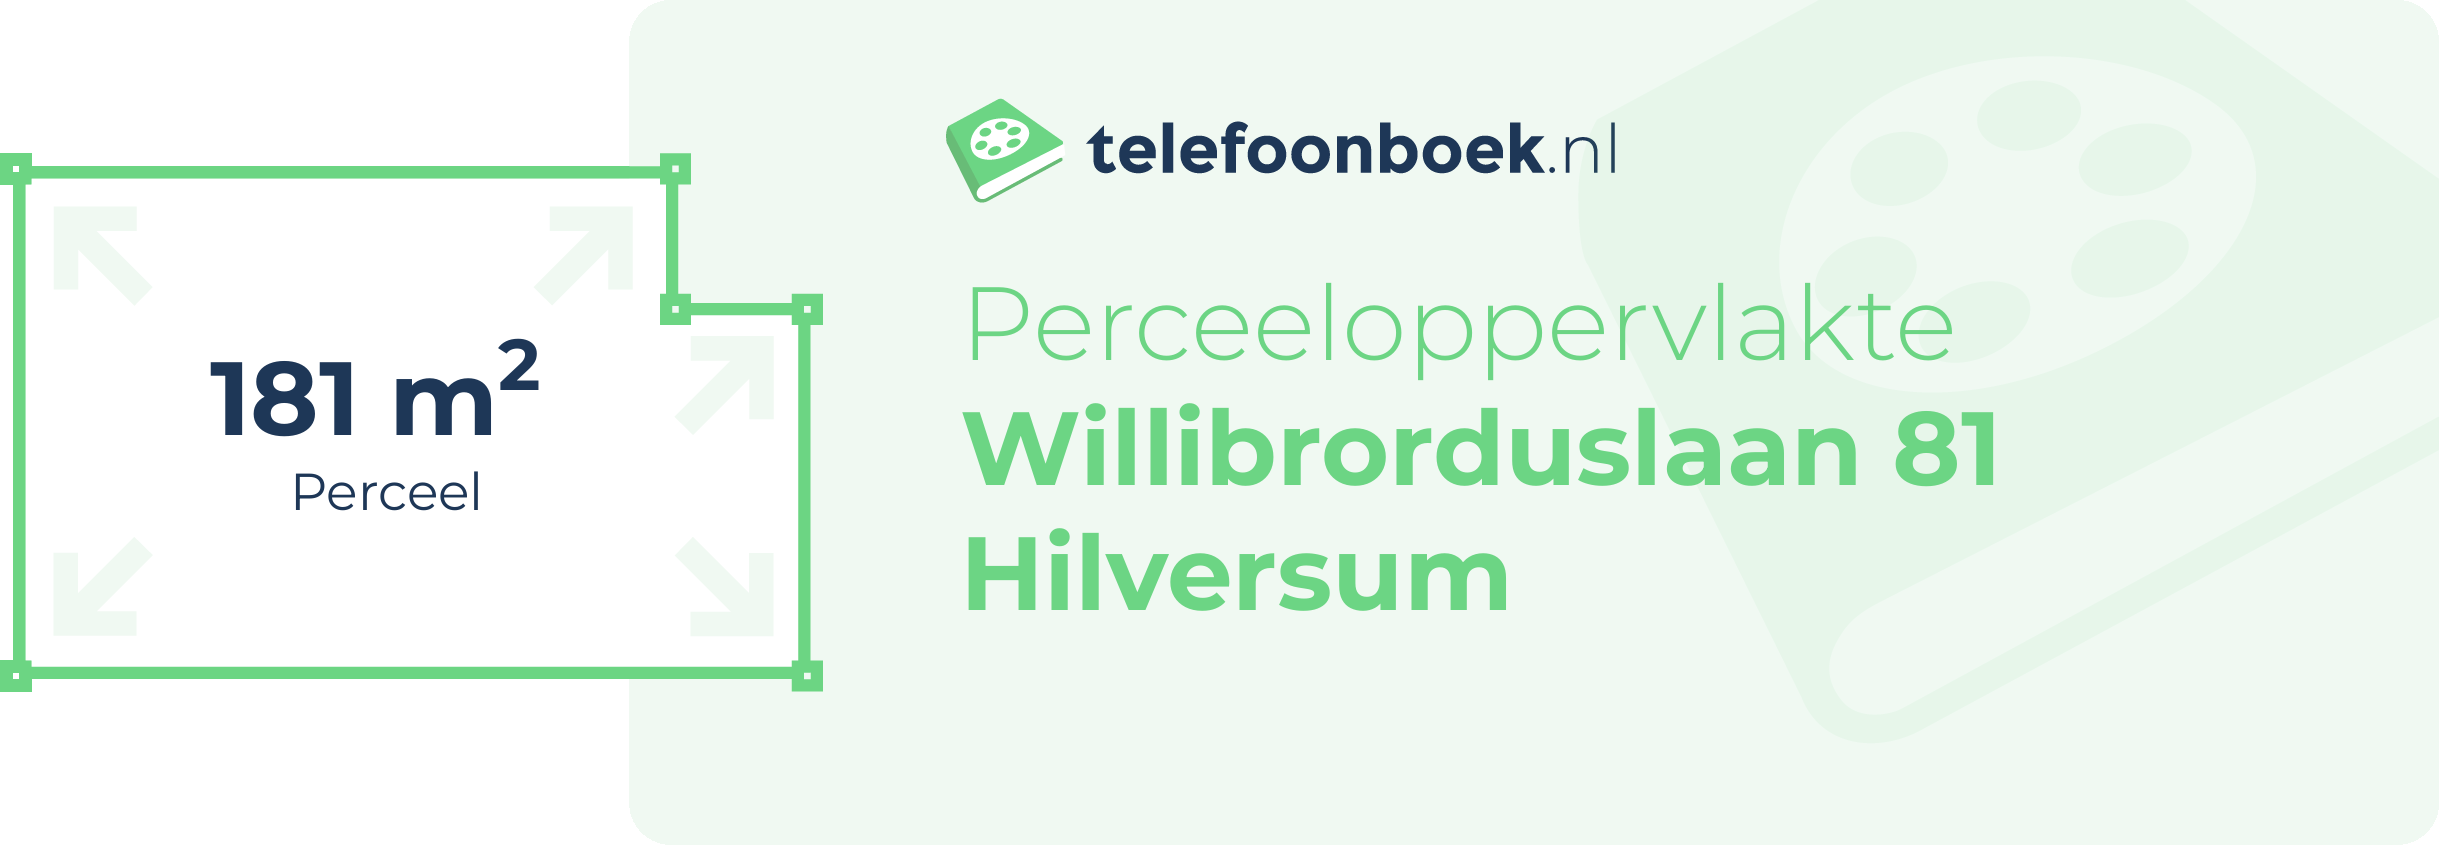 Perceeloppervlakte Willibrorduslaan 81 Hilversum